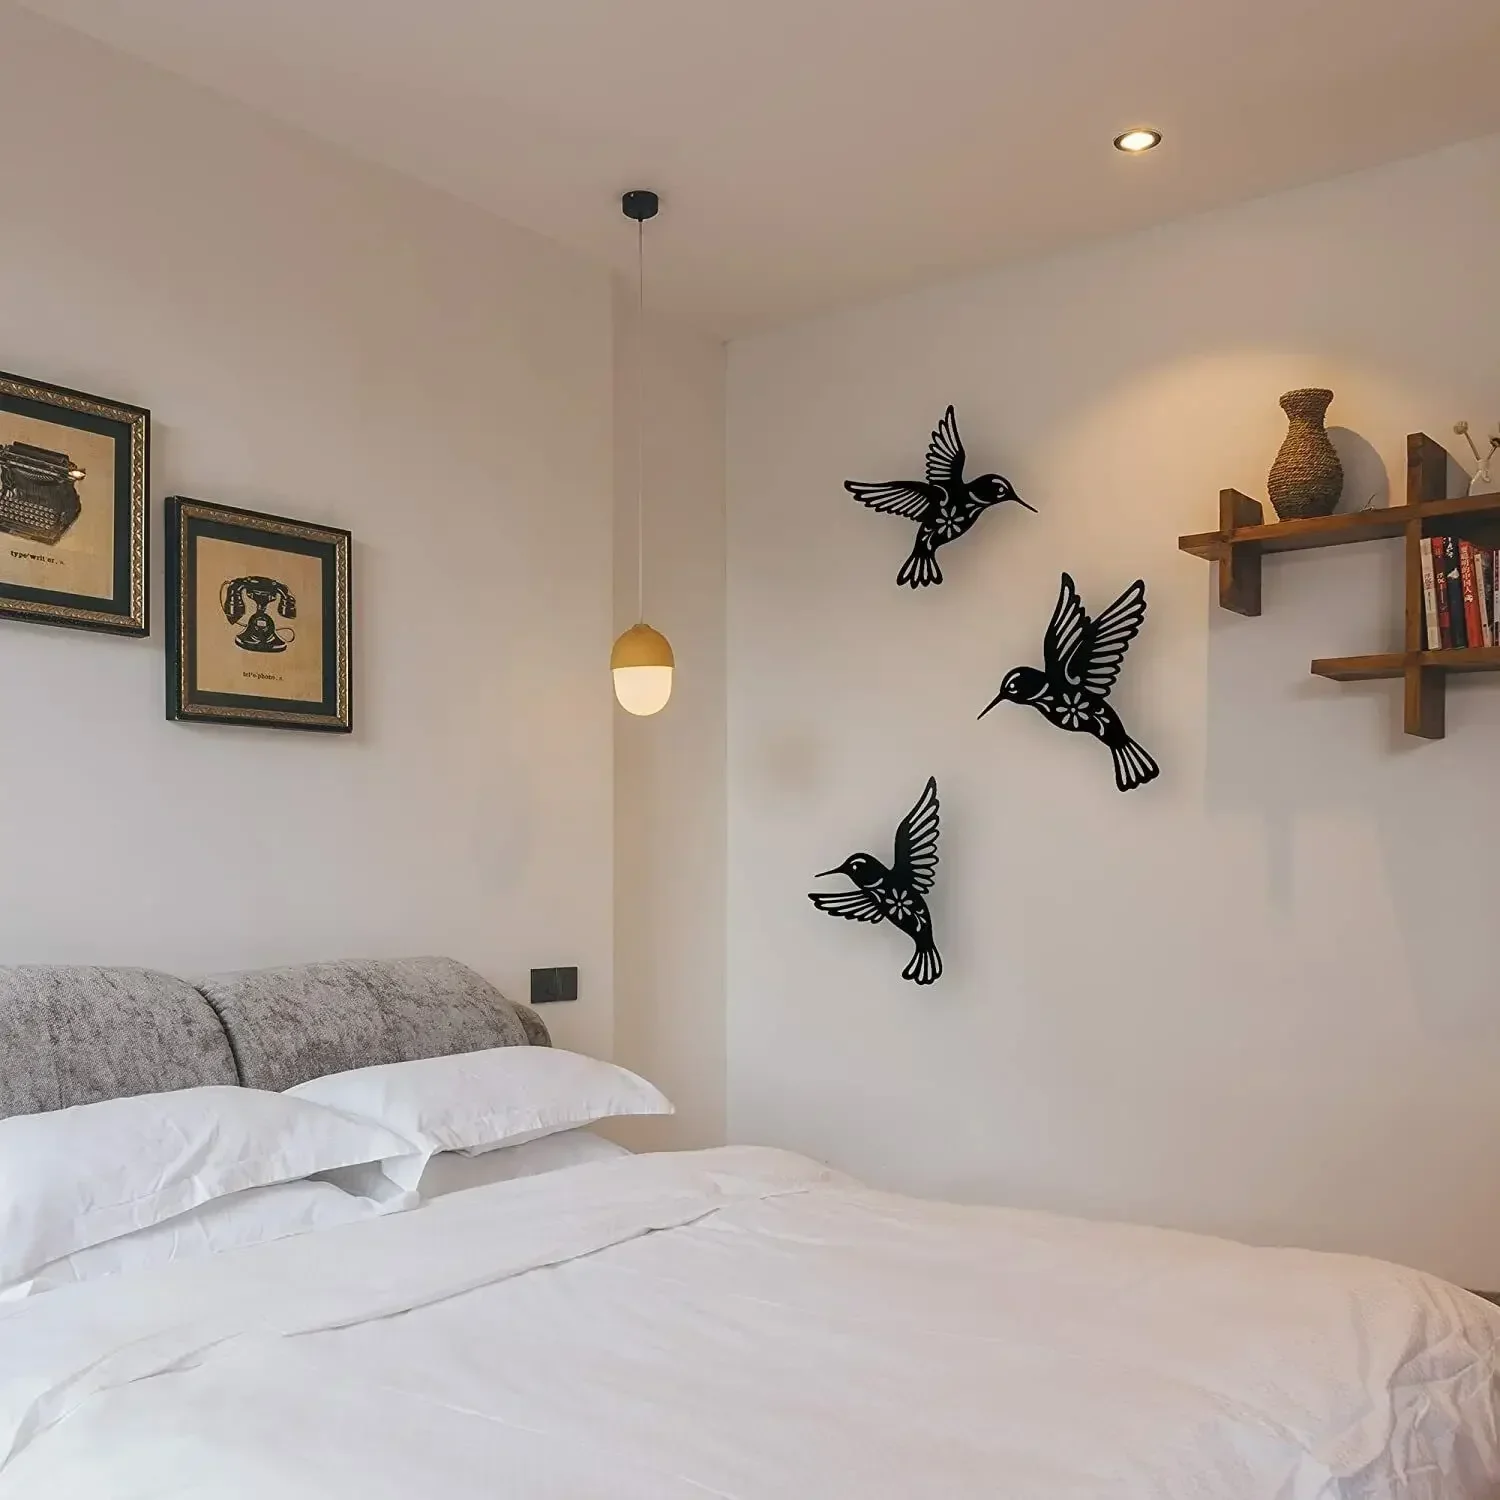 

Iron Crafts, Metal Hummingbird Wall Art Decor, Set of 3 Black Concise Decoration Hanging